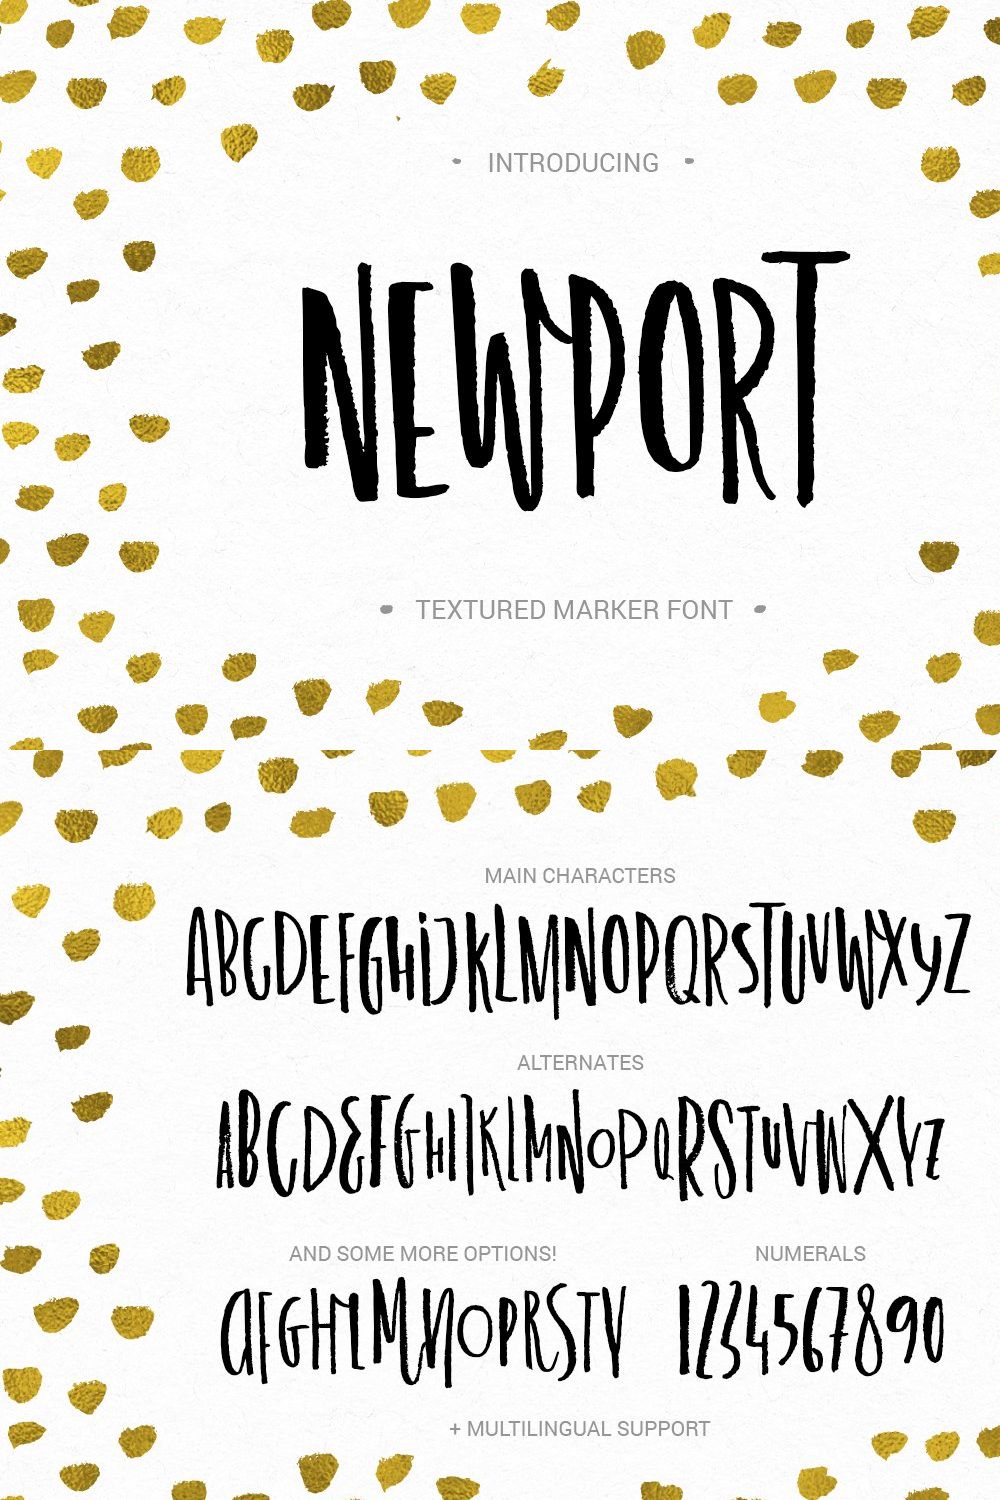 Newport - marker font pinterest preview image.